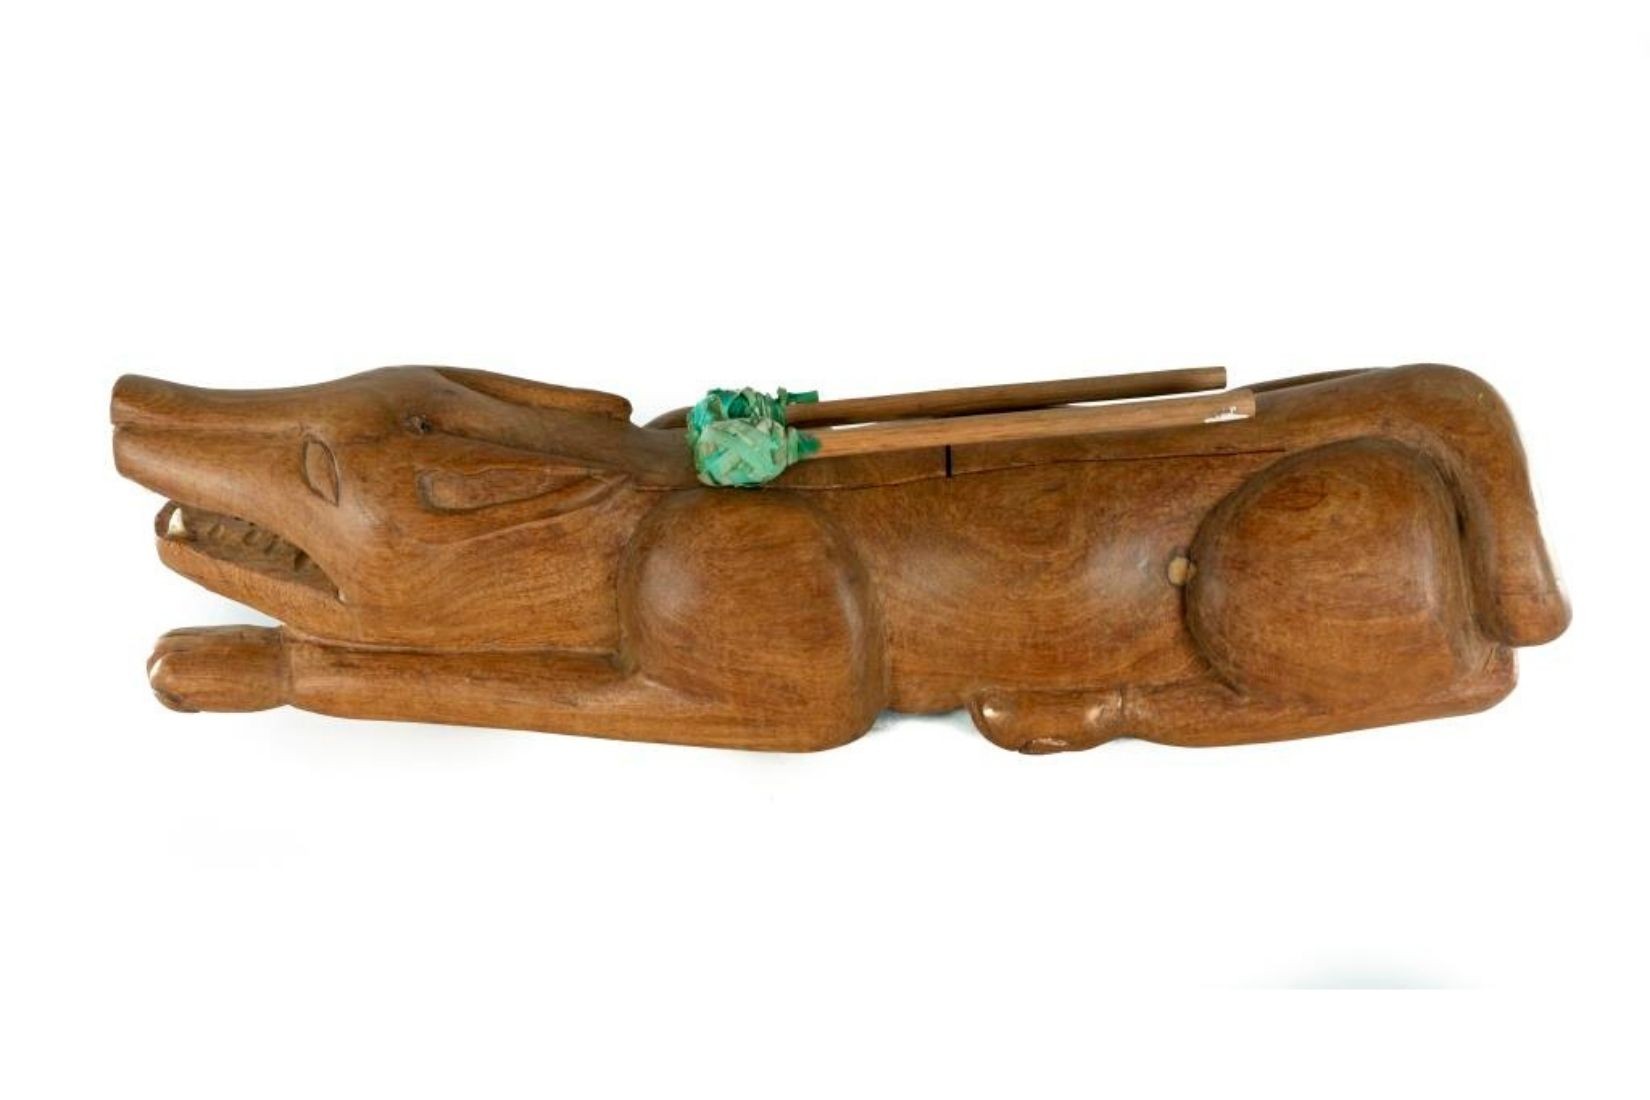 Teponaztle de madera de mezquite tallada a base de lengüetas. Artesano Juan Suárez Terán. San Luis de la Paz, Gto. 2005. Col. AmigosMAP. (Foto: EKV).